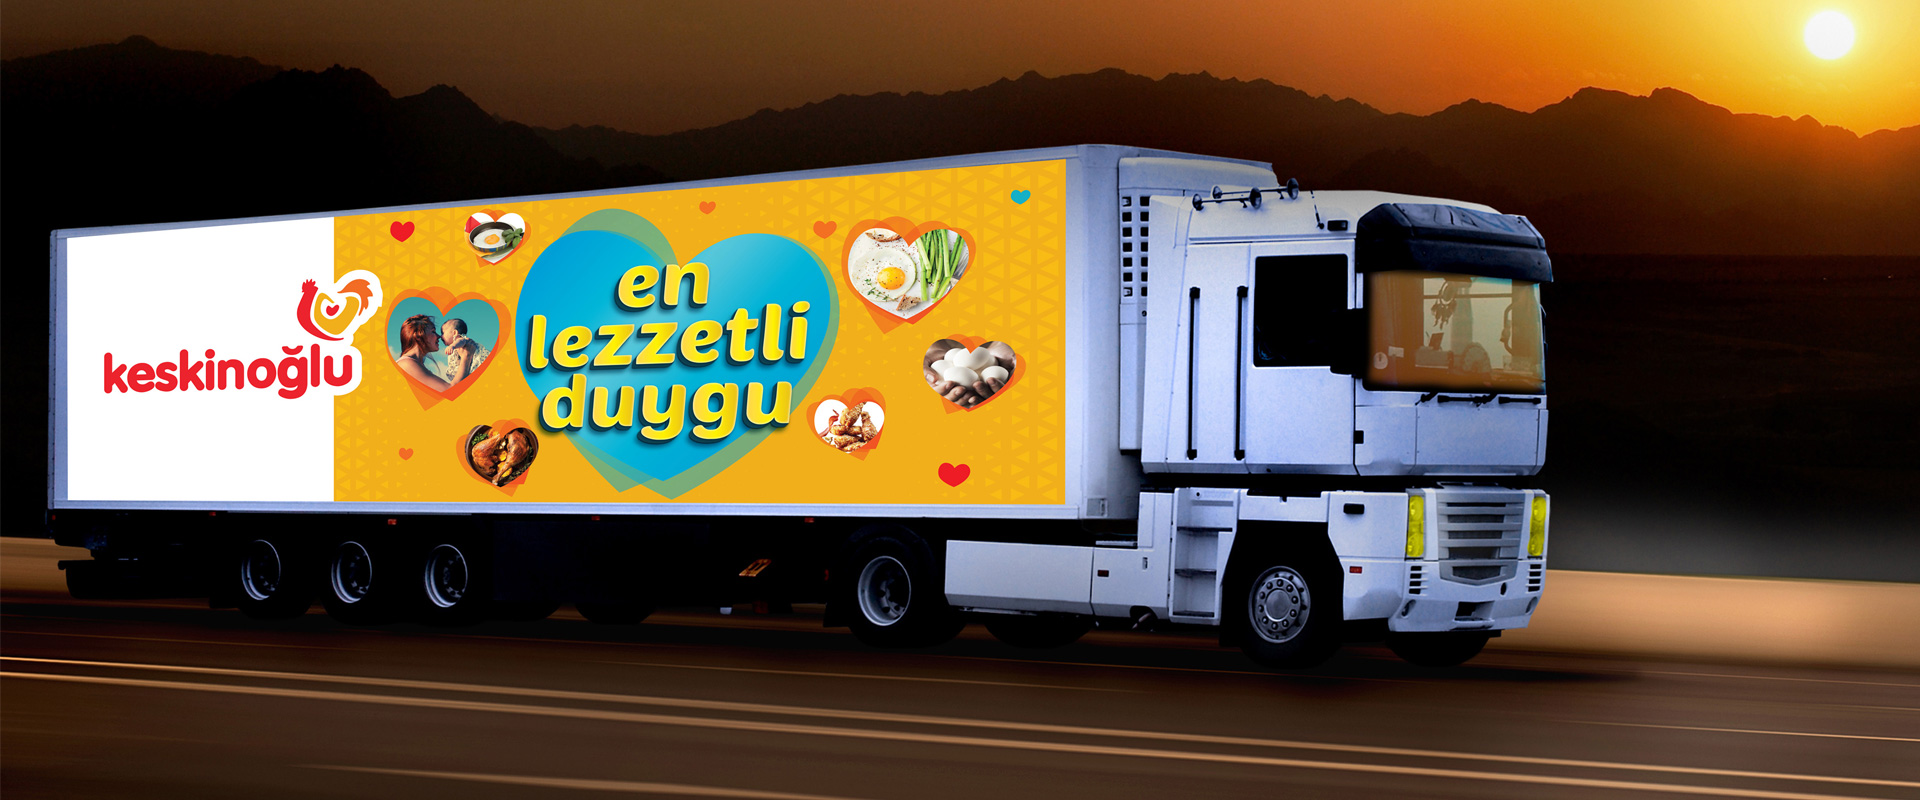 Keskinoğlu - KONSEPTIZ Advertising Agency in Turkey